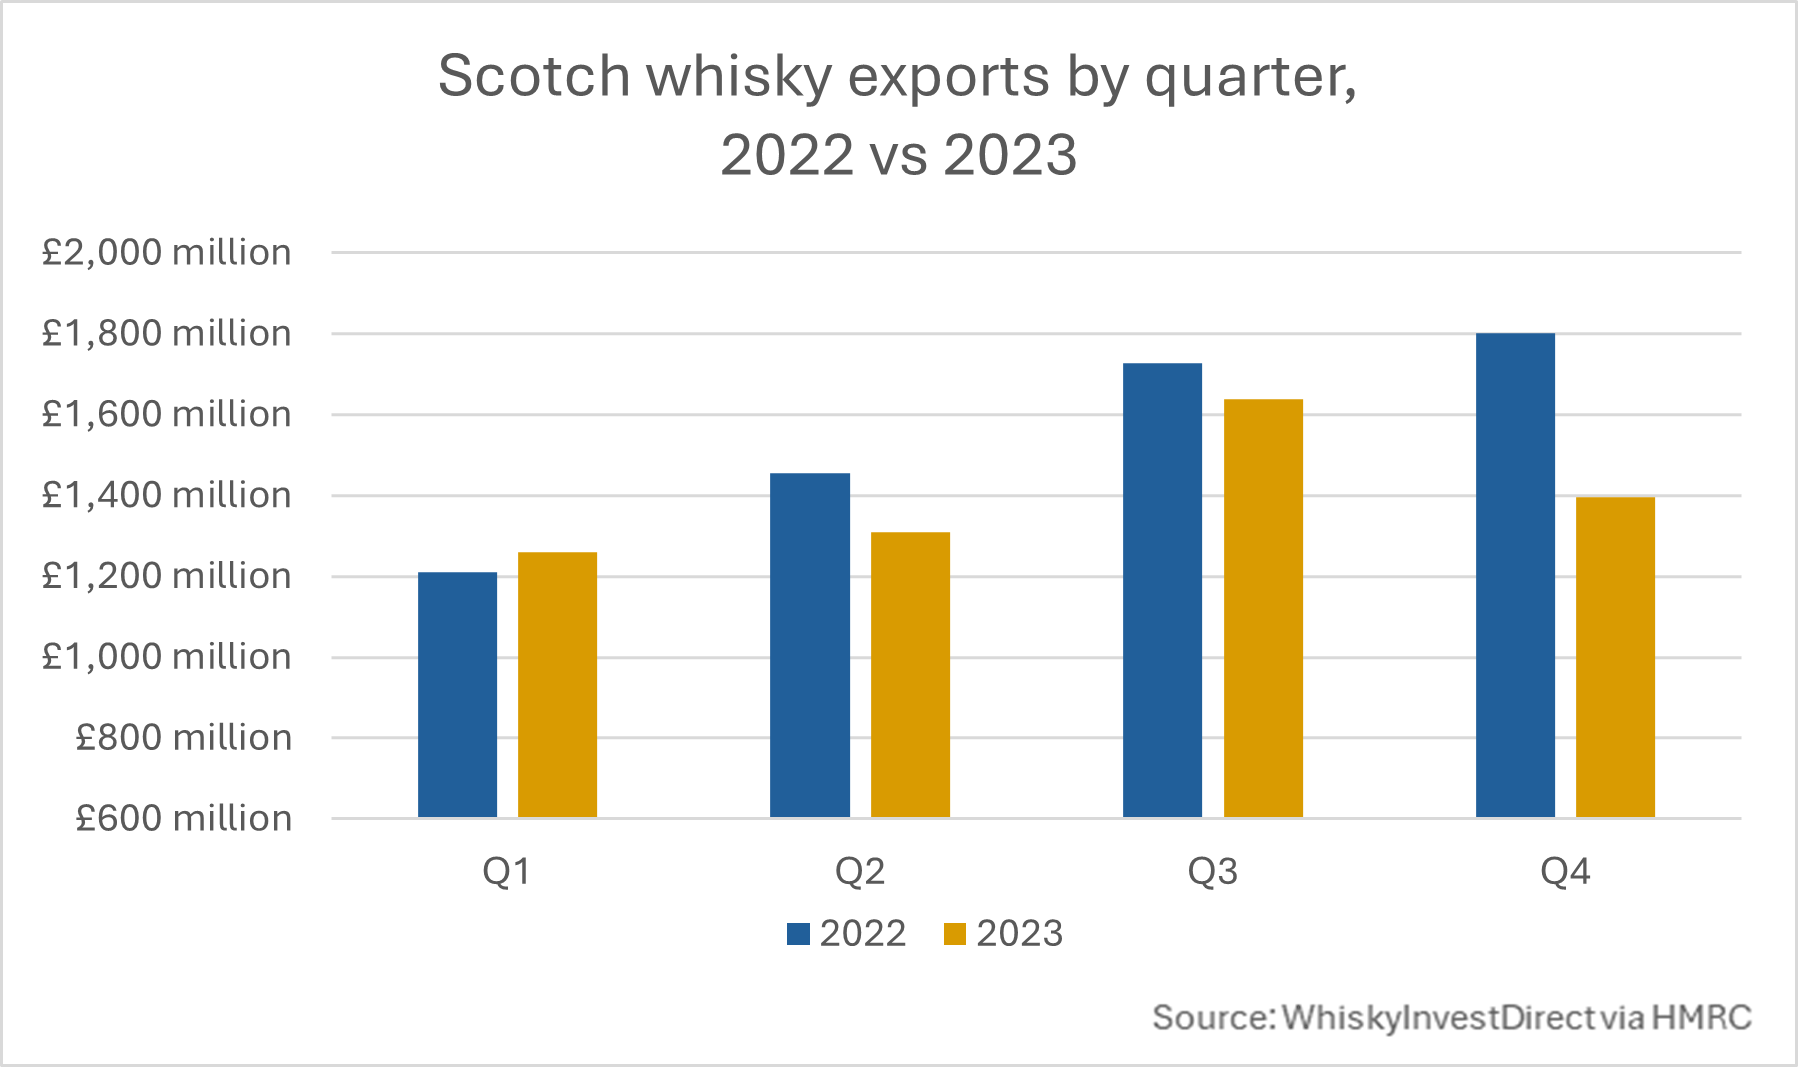 Quarterly comparison of Scotch whisky exports, 2022 vs 2023